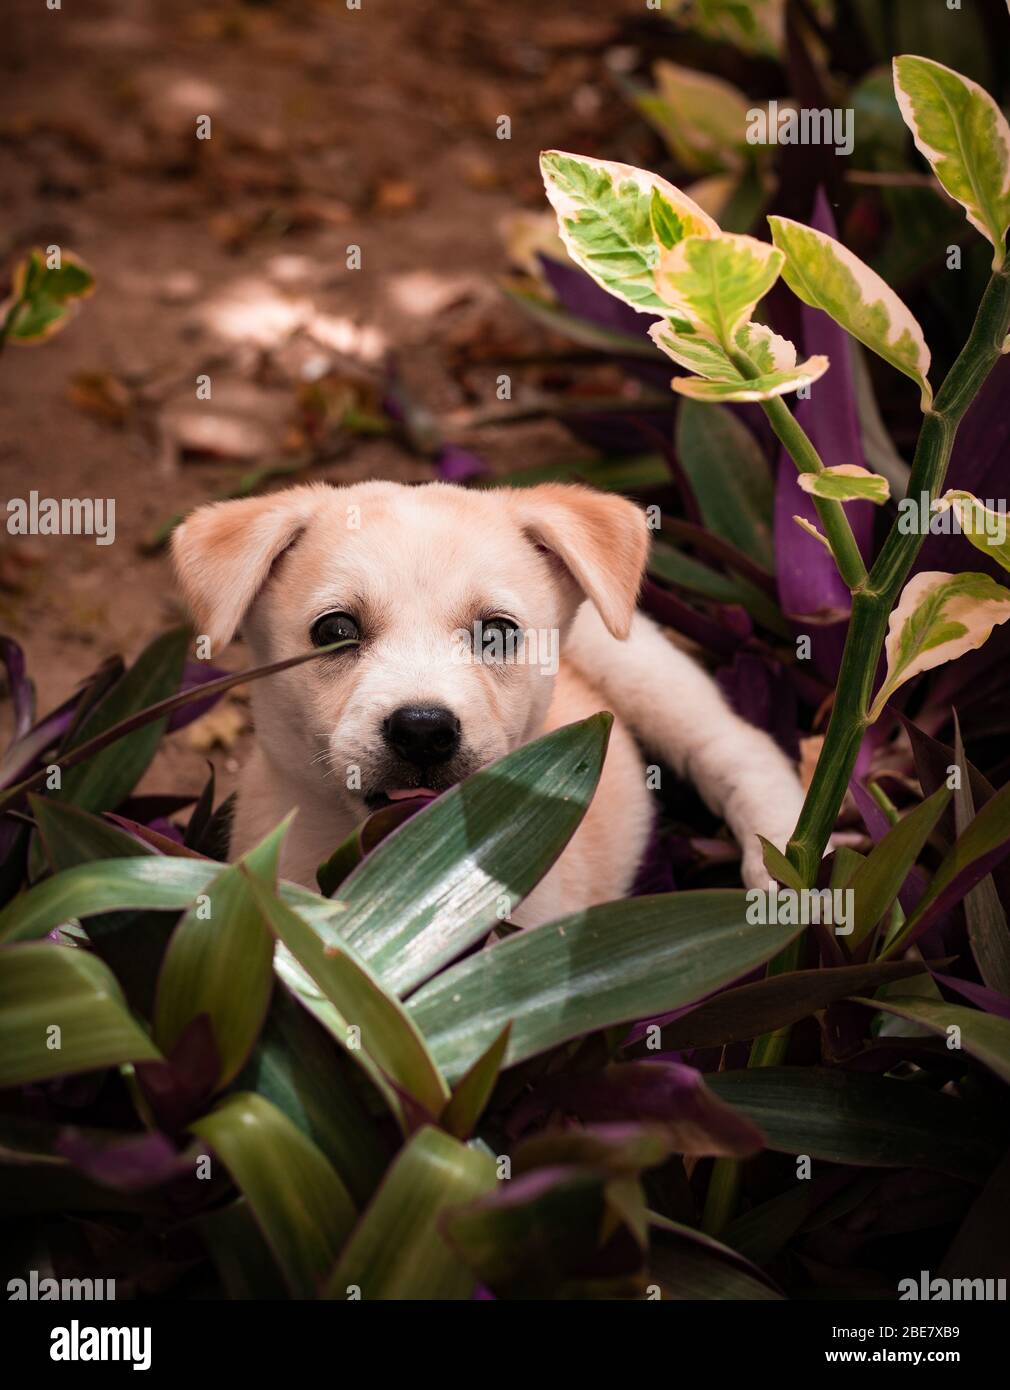 Cute Labrador puppy playing and enjoying in a garden Stock Photo